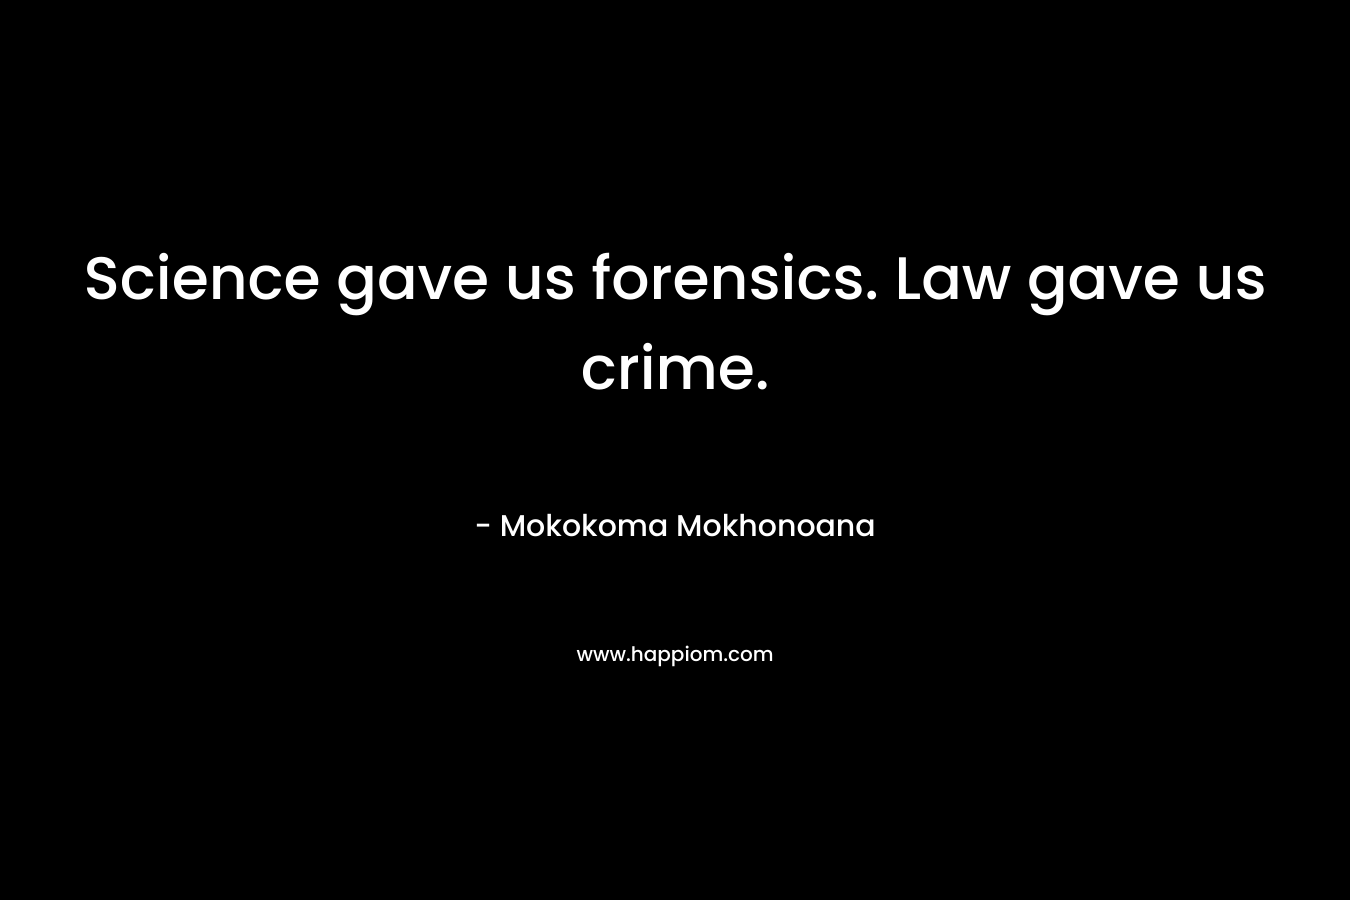 Science gave us forensics. Law gave us crime.